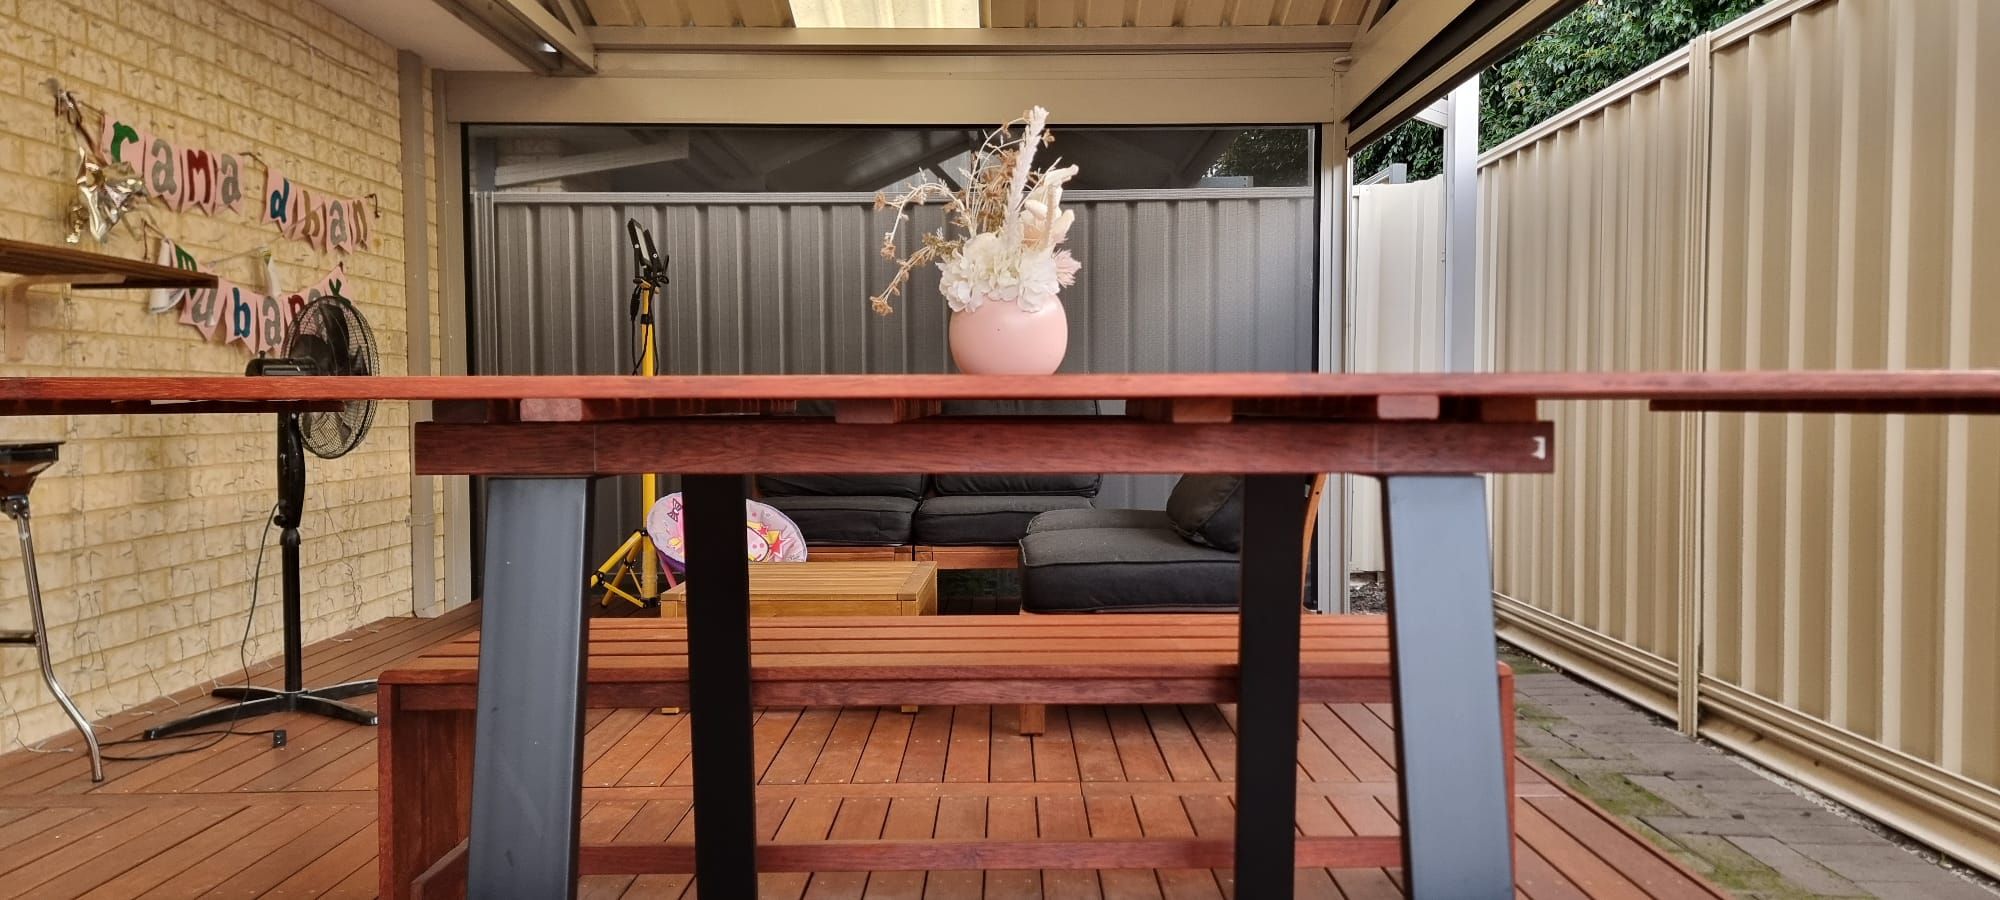 Outdoor table using Merbau fence panel | Bunnings Workshop community